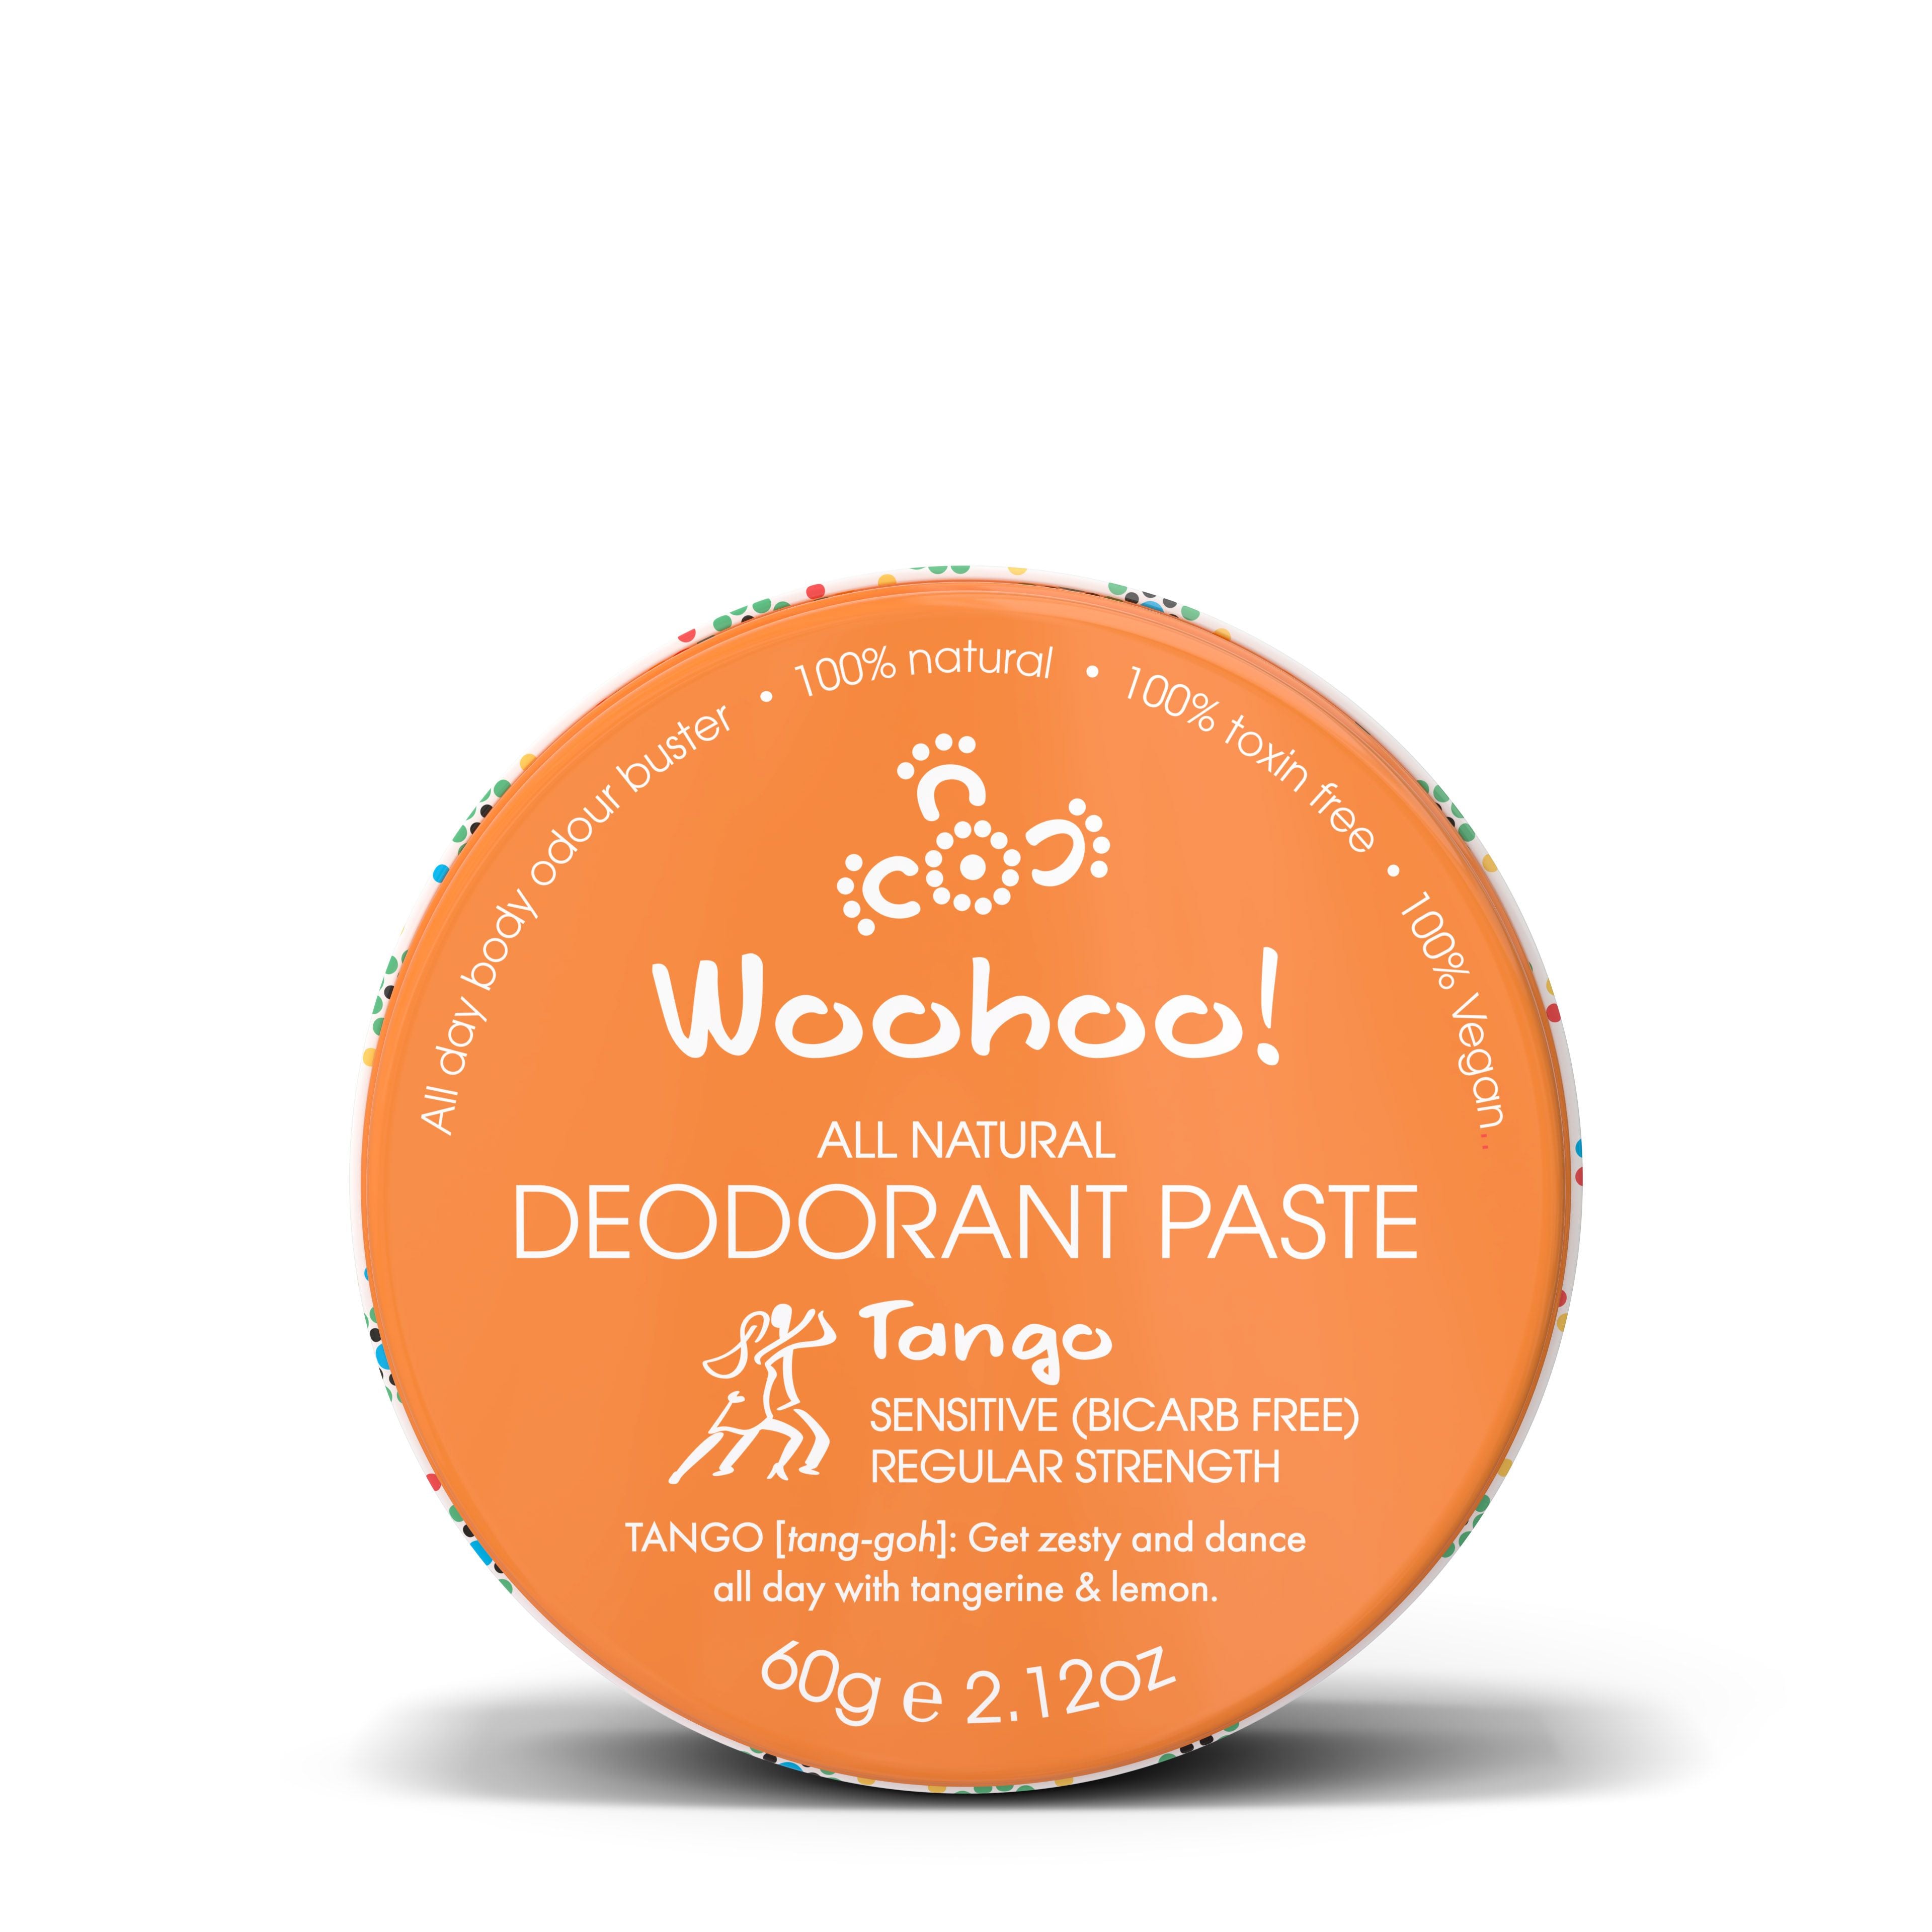 Woohoo Body! Natural Deodorant & Anti Chafe - Tango